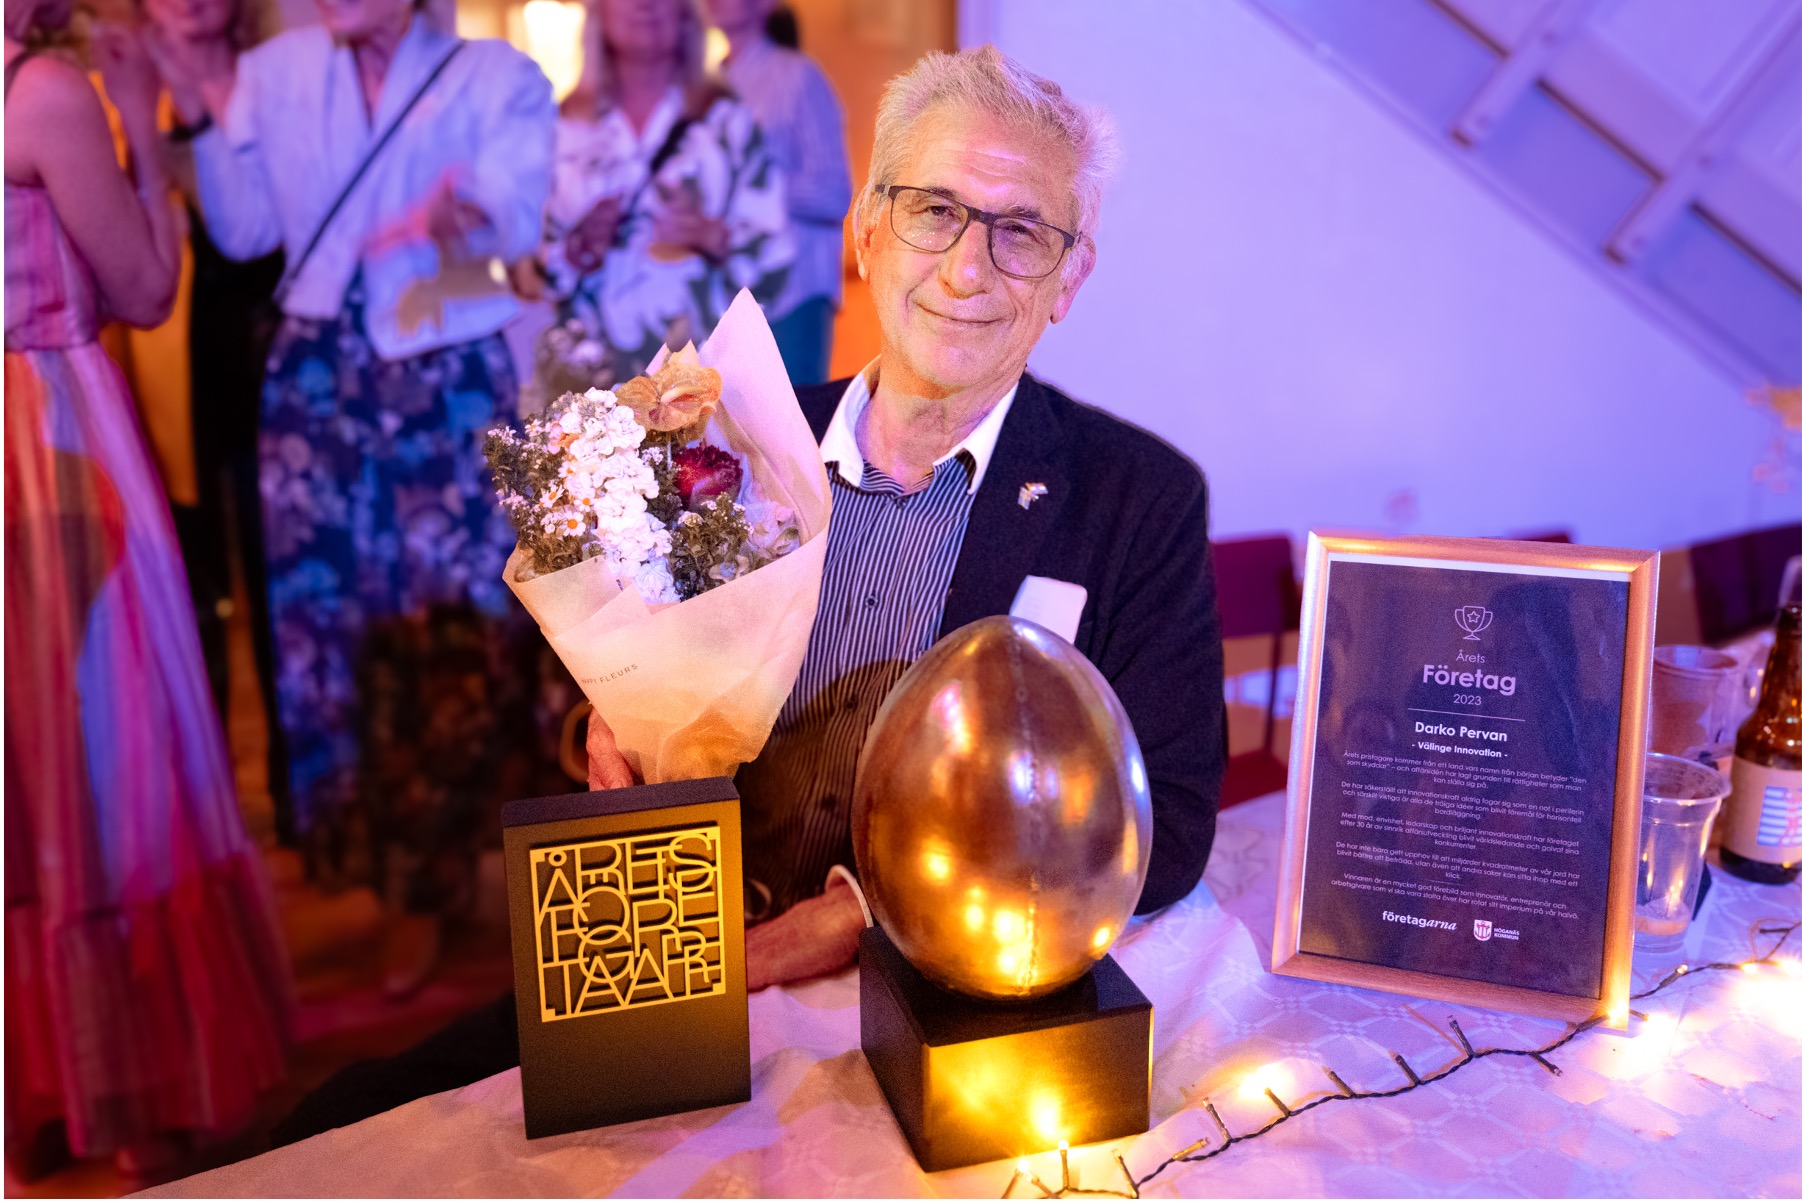 Välinge founder Named  Entrepreneur of the Year